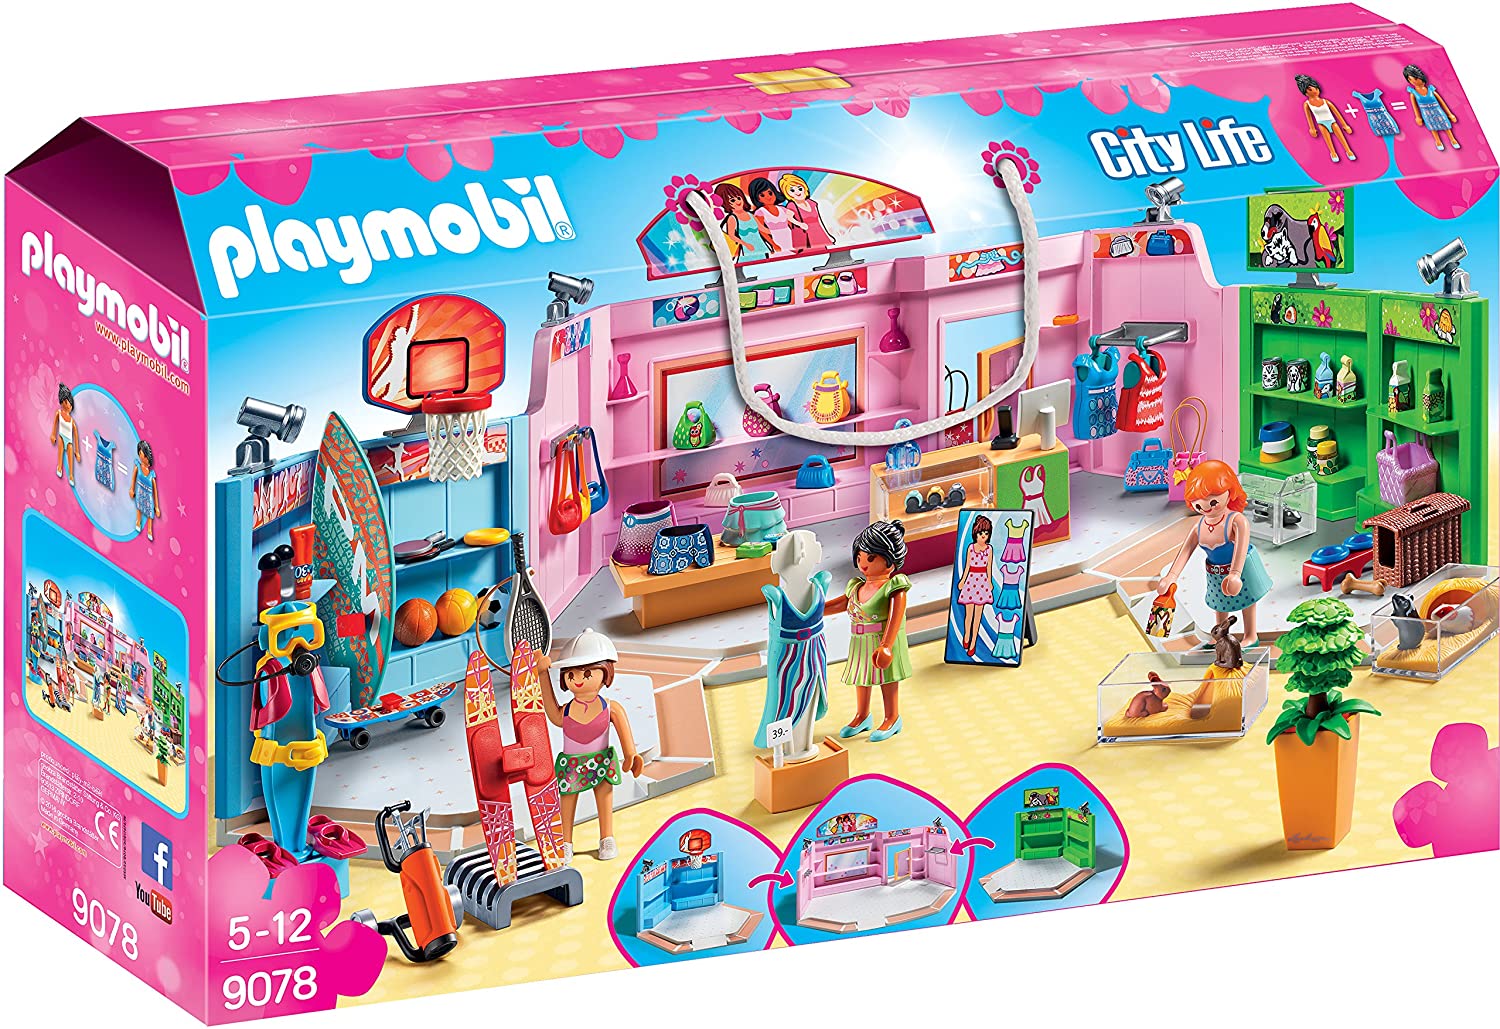 Playmobil City Life Galerie marchande 9078 - Monsieur Jouet